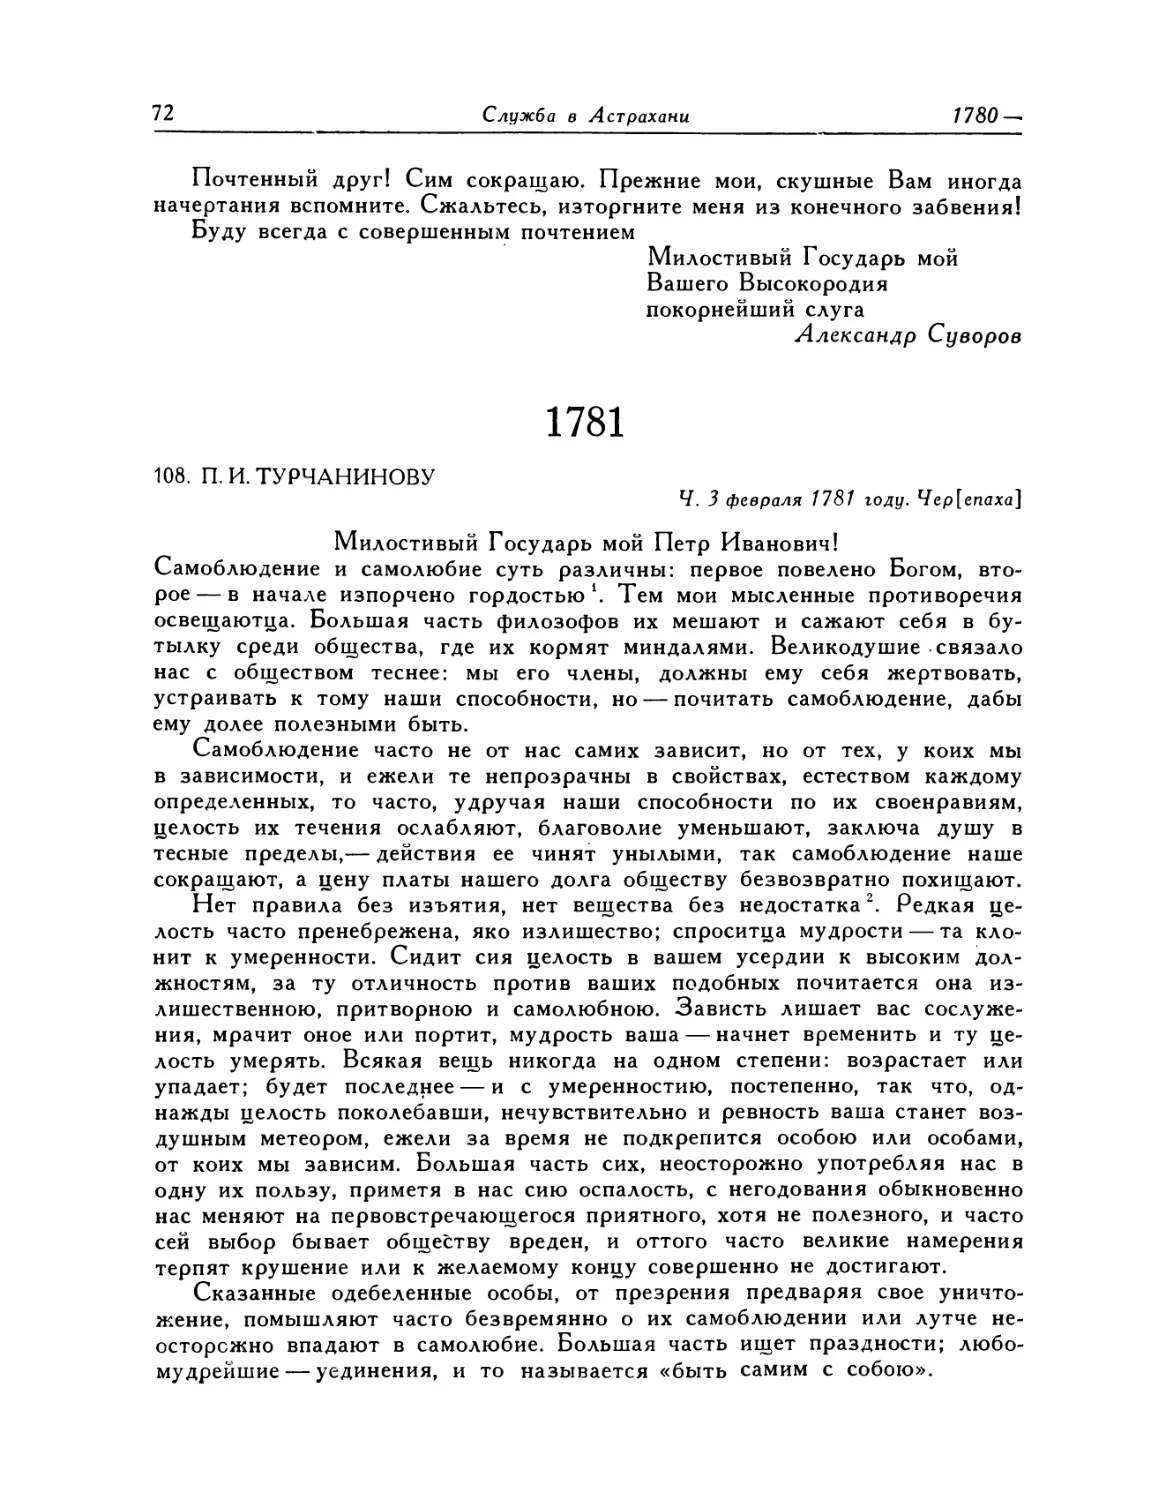 108. П.И.Турчанинову. 3.II.-6.II.1781